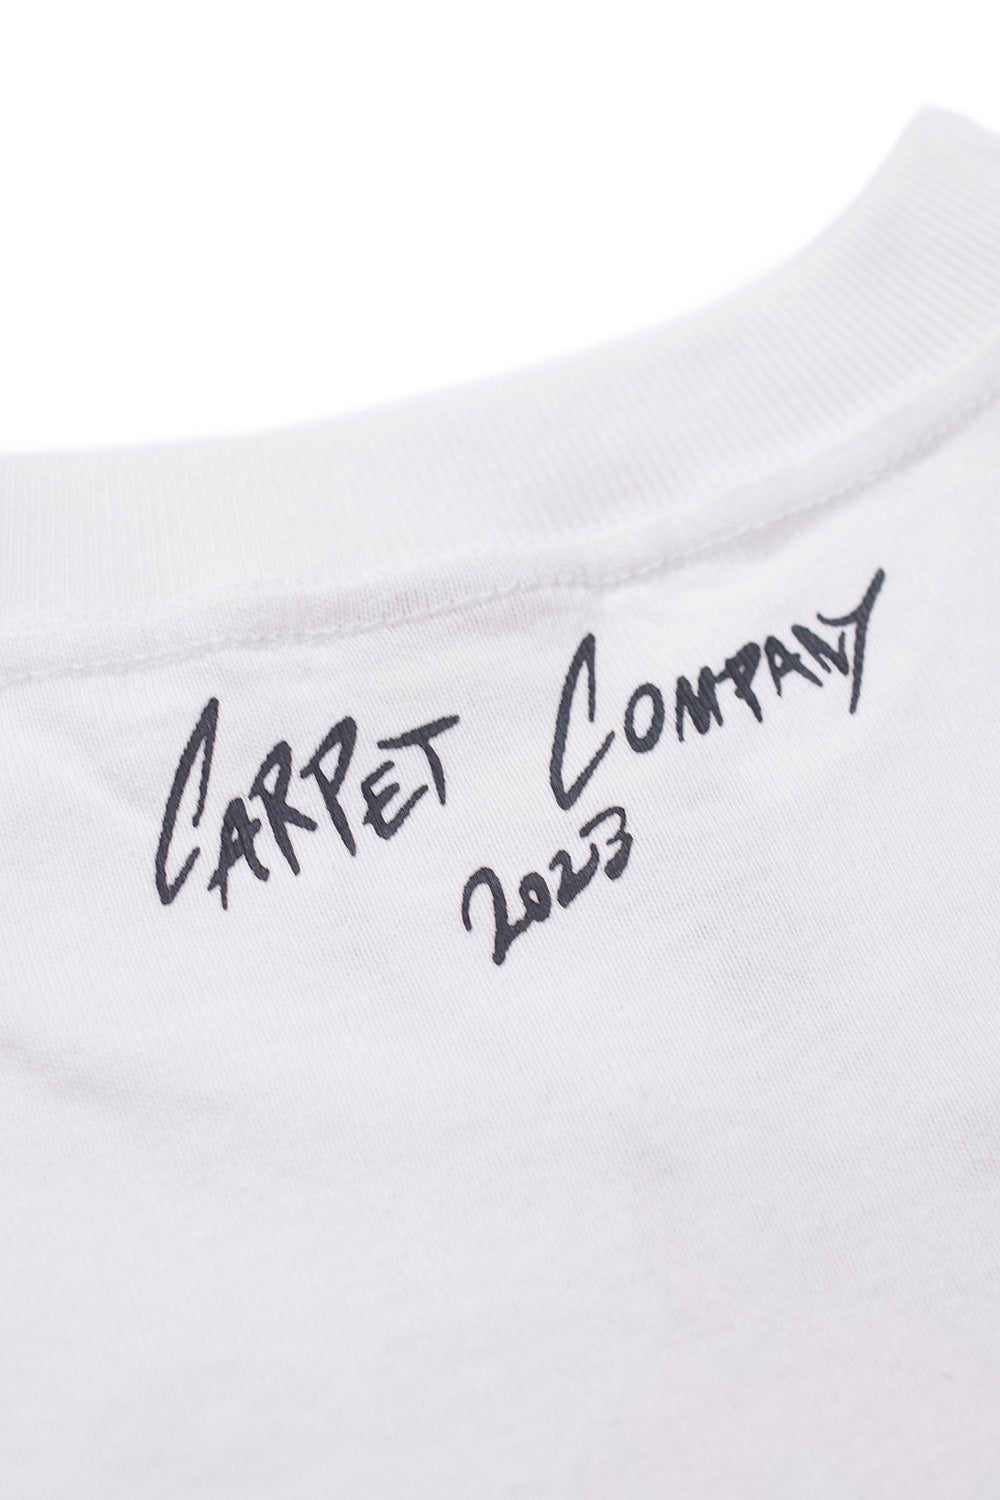 Carpet Company C-Star T-Shirt White (Pink Print) - BONKERS